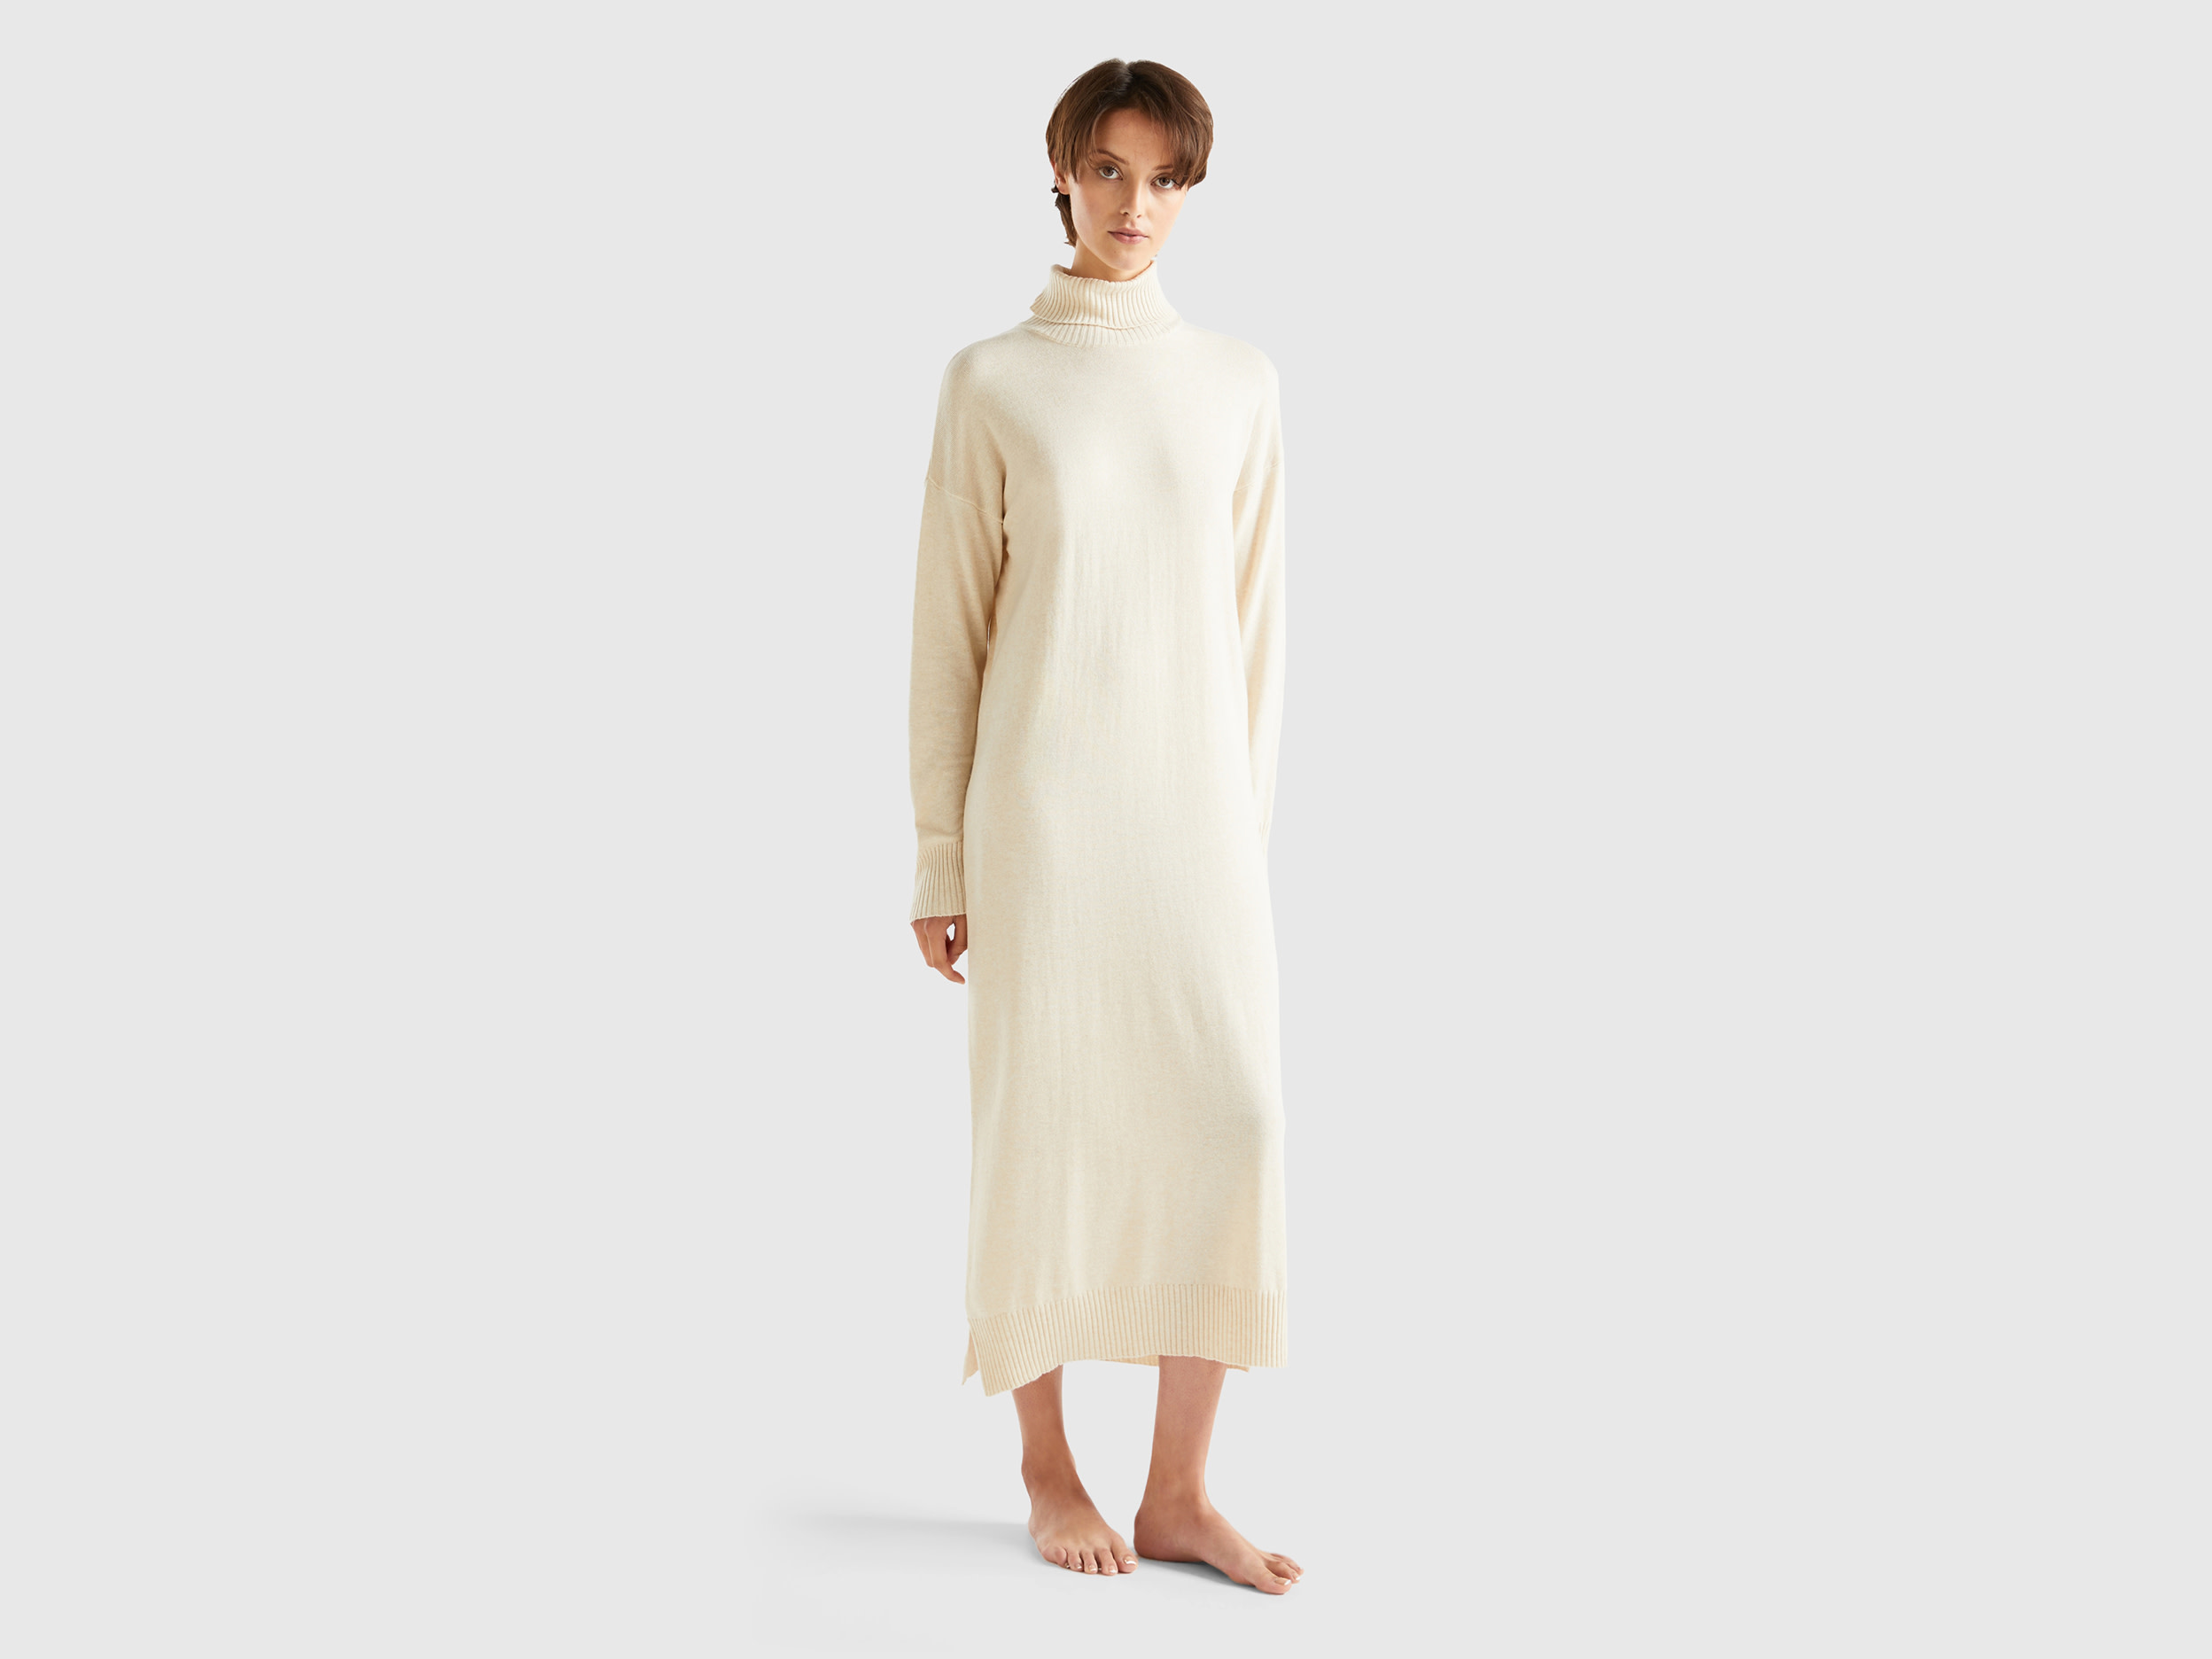 Benetton, Turtleneck Dress In Cashmere Blend, size M-L, Creamy White, Women